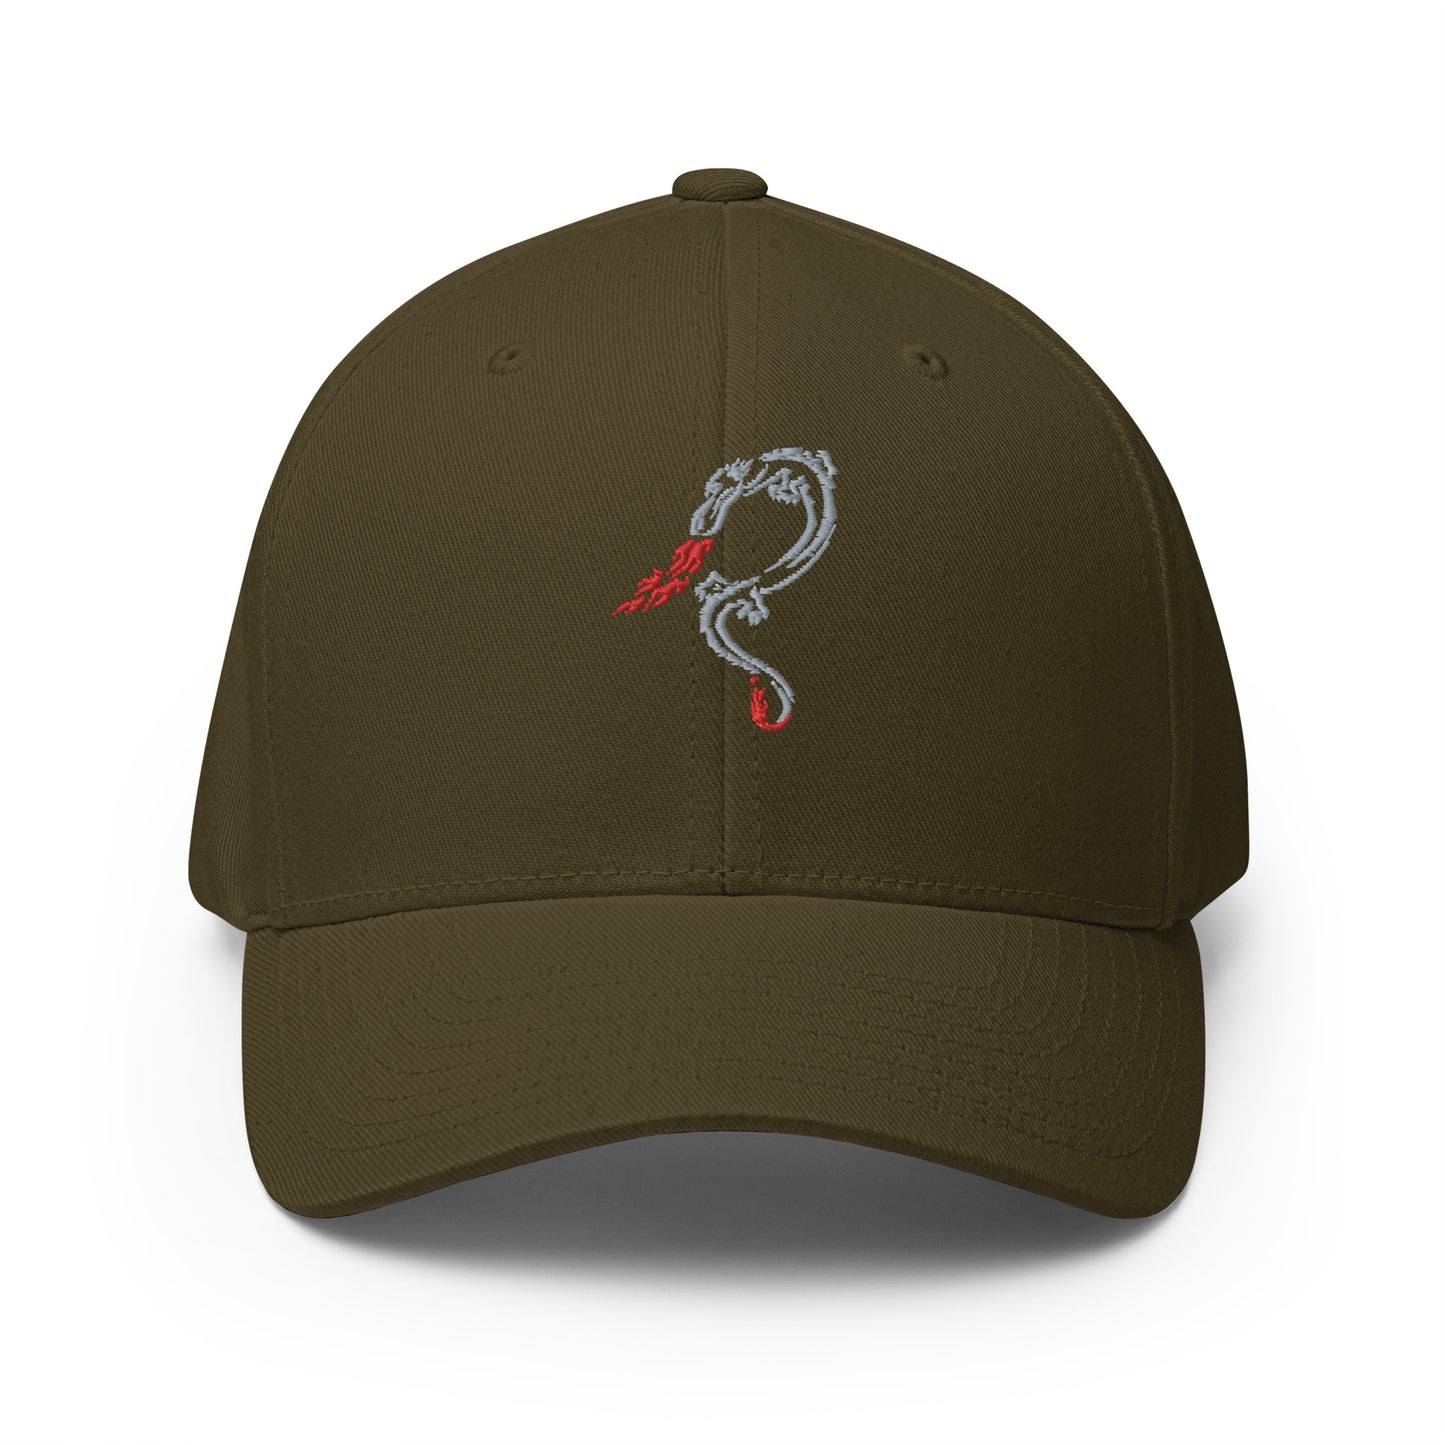 Baseball Cap with Dragon Symbol